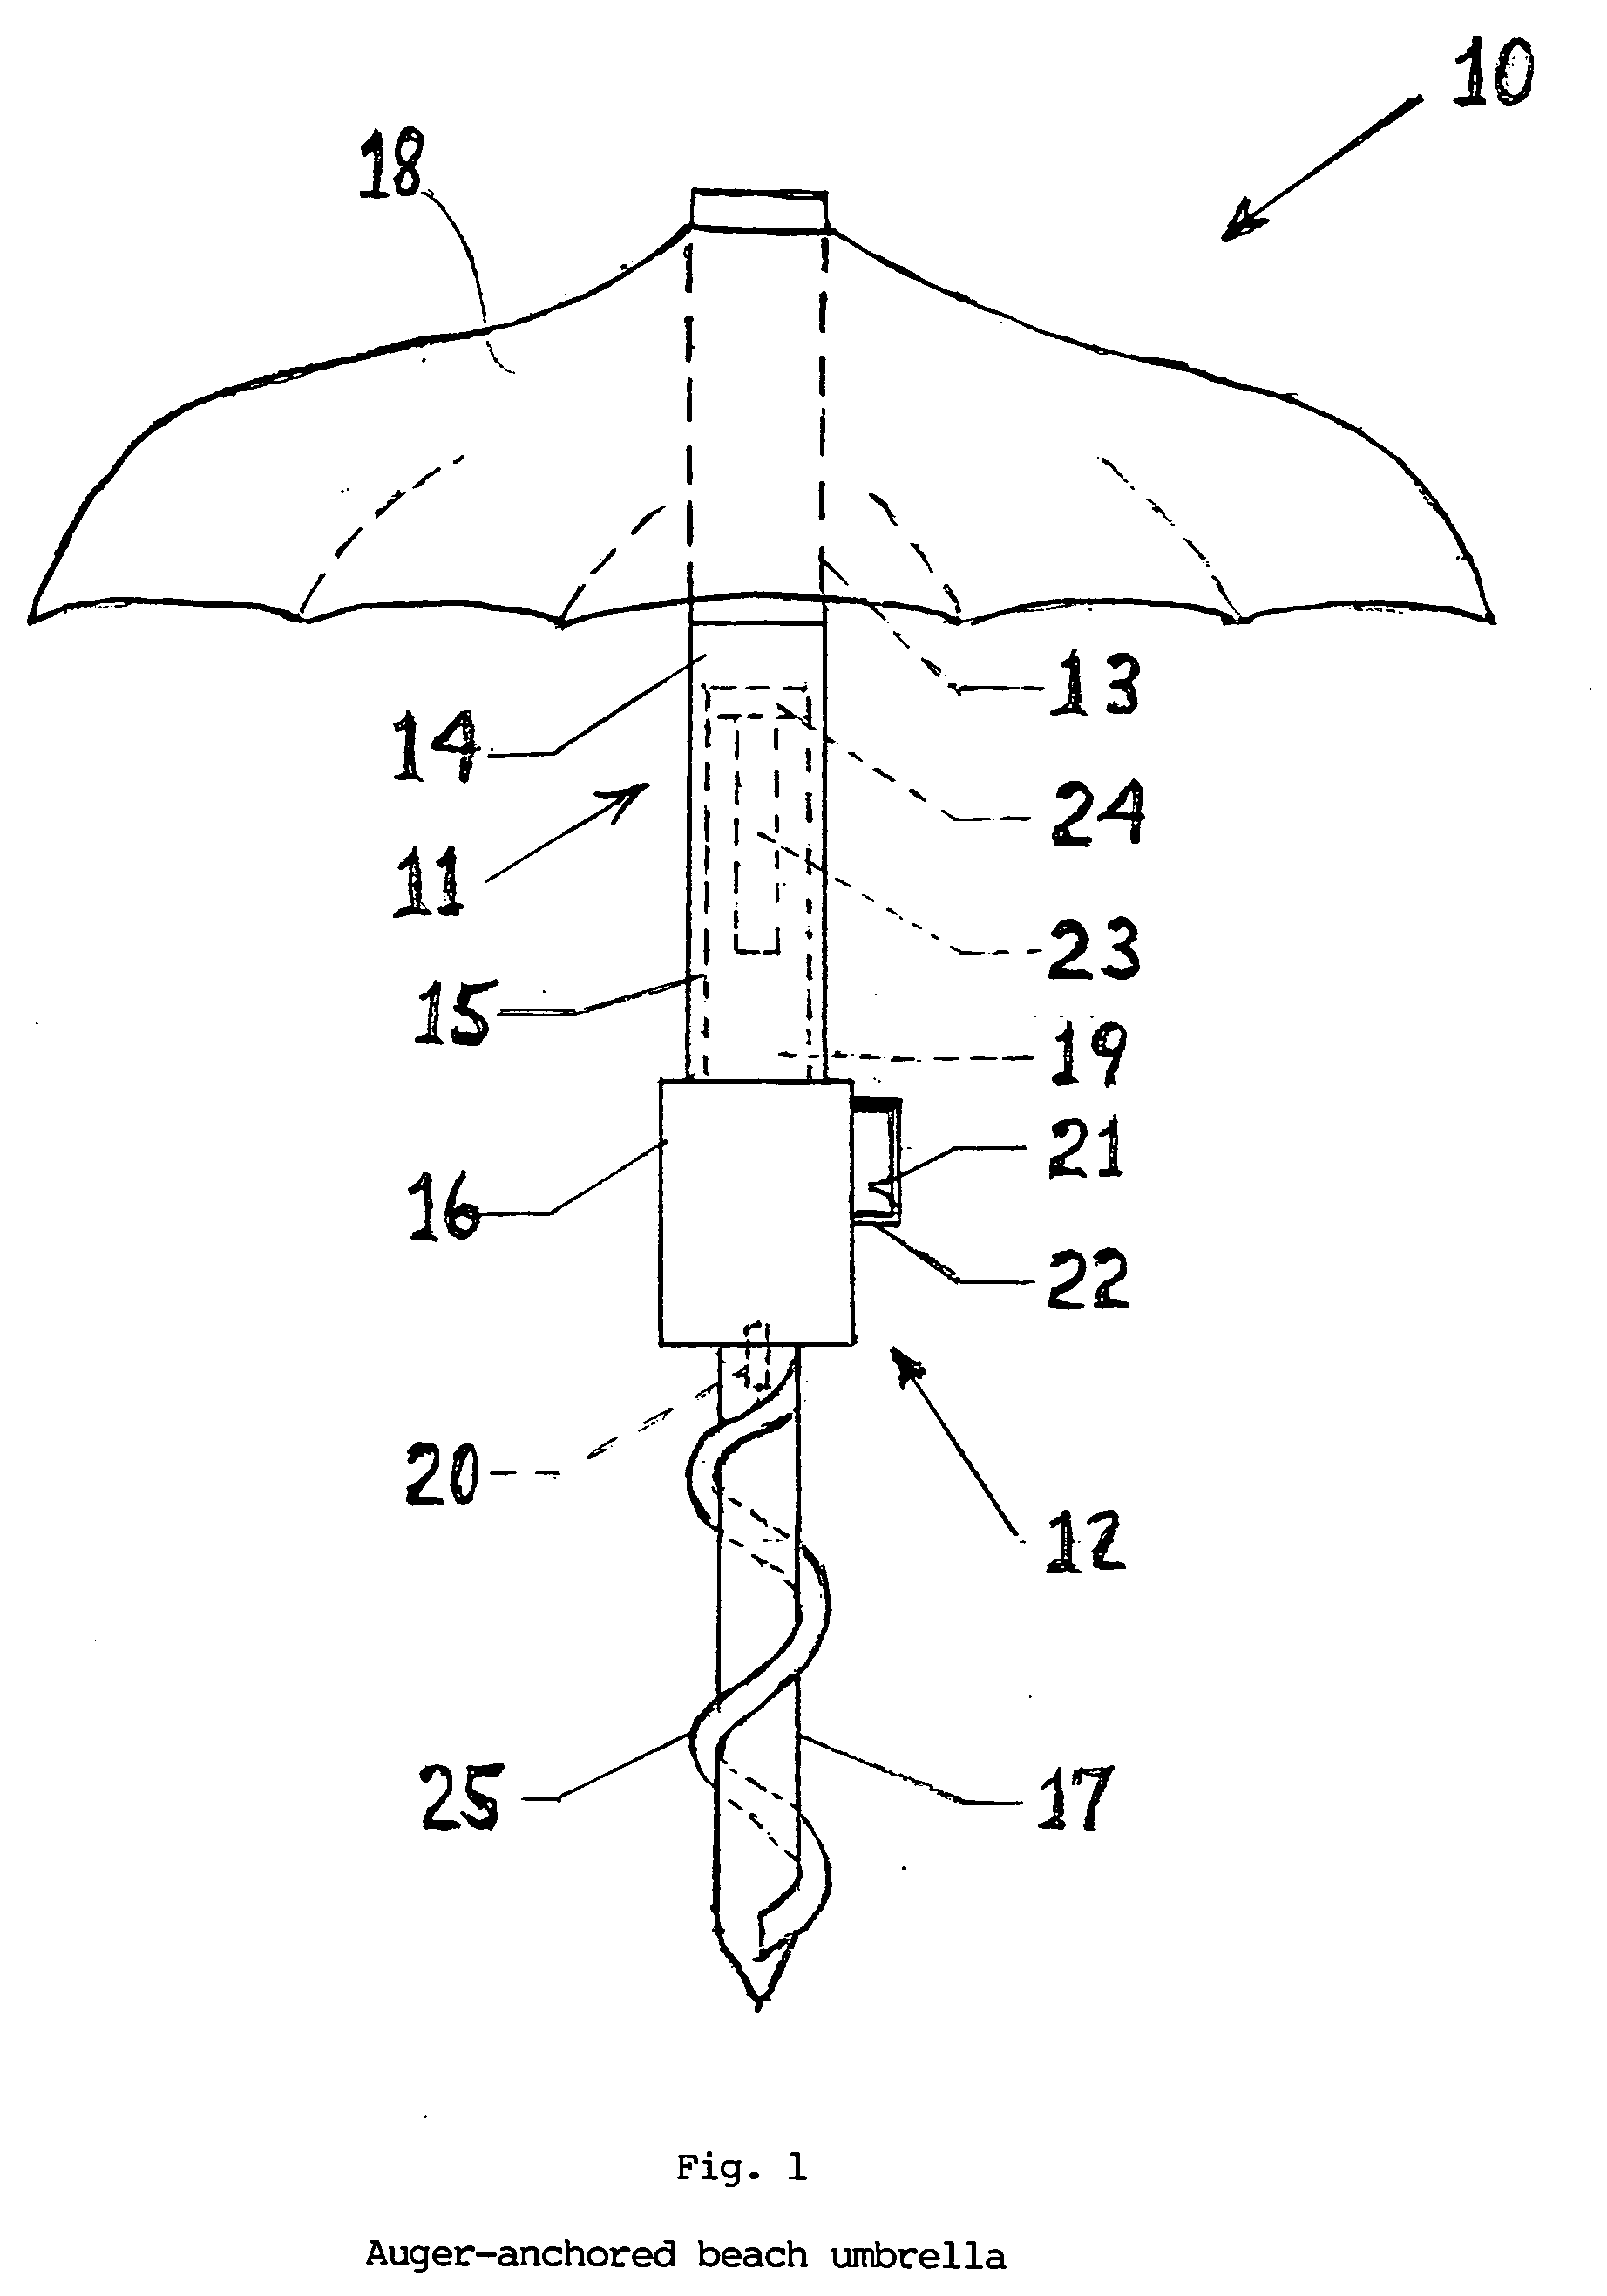 Auger-anchored beach umbrella